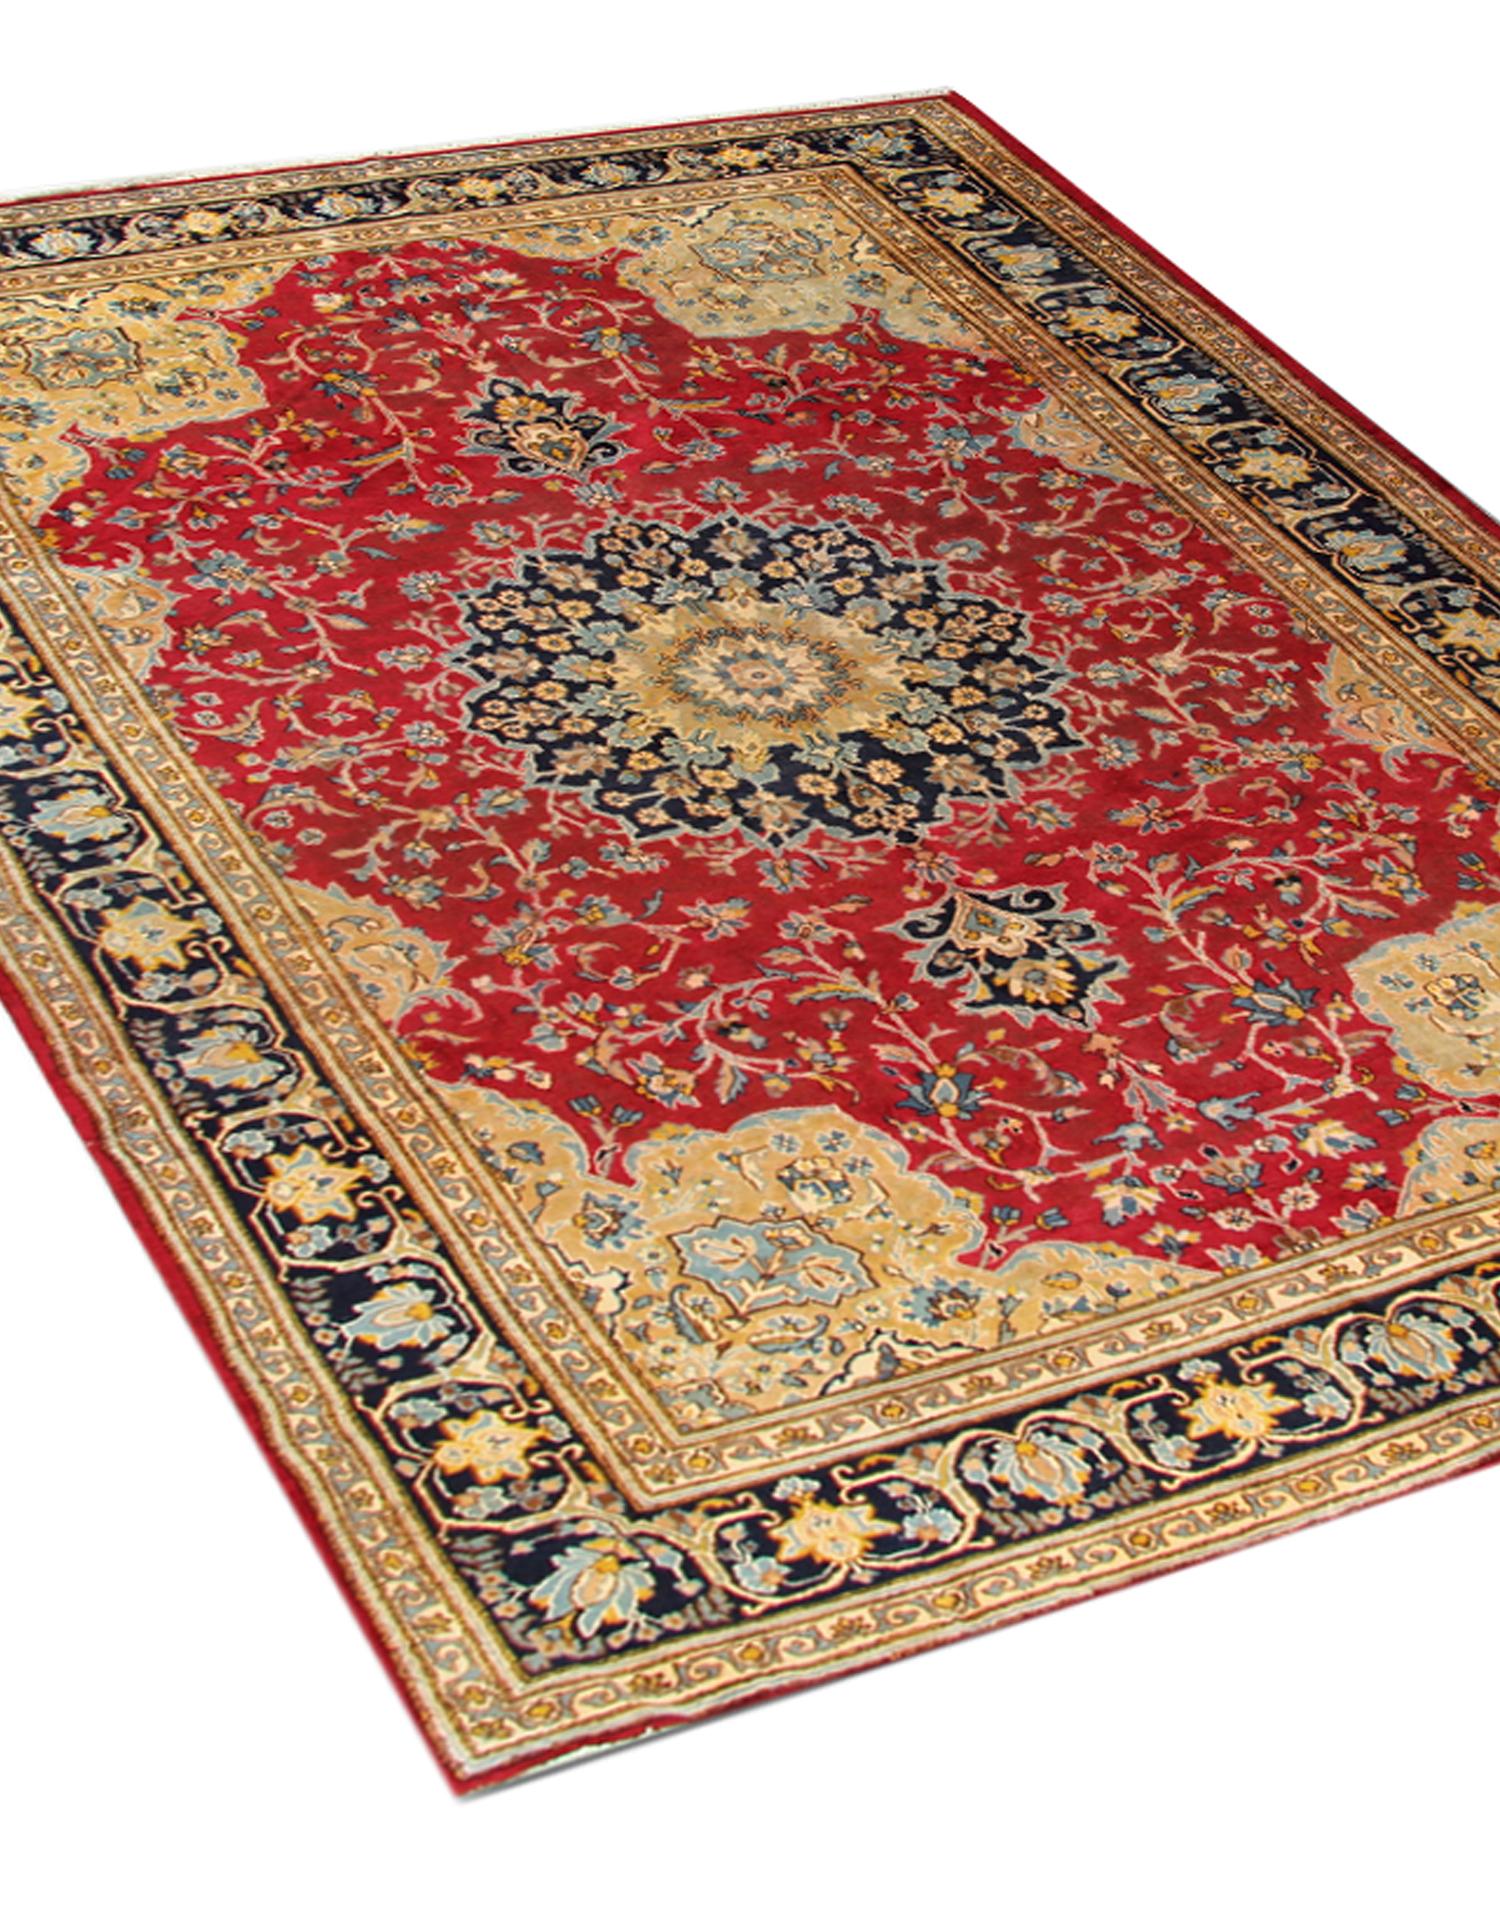 Vegetable Dyed Vintage Carpet Red Wool Area Rug Hand-knotted Medallion Oriental Rug- 212x335cm 